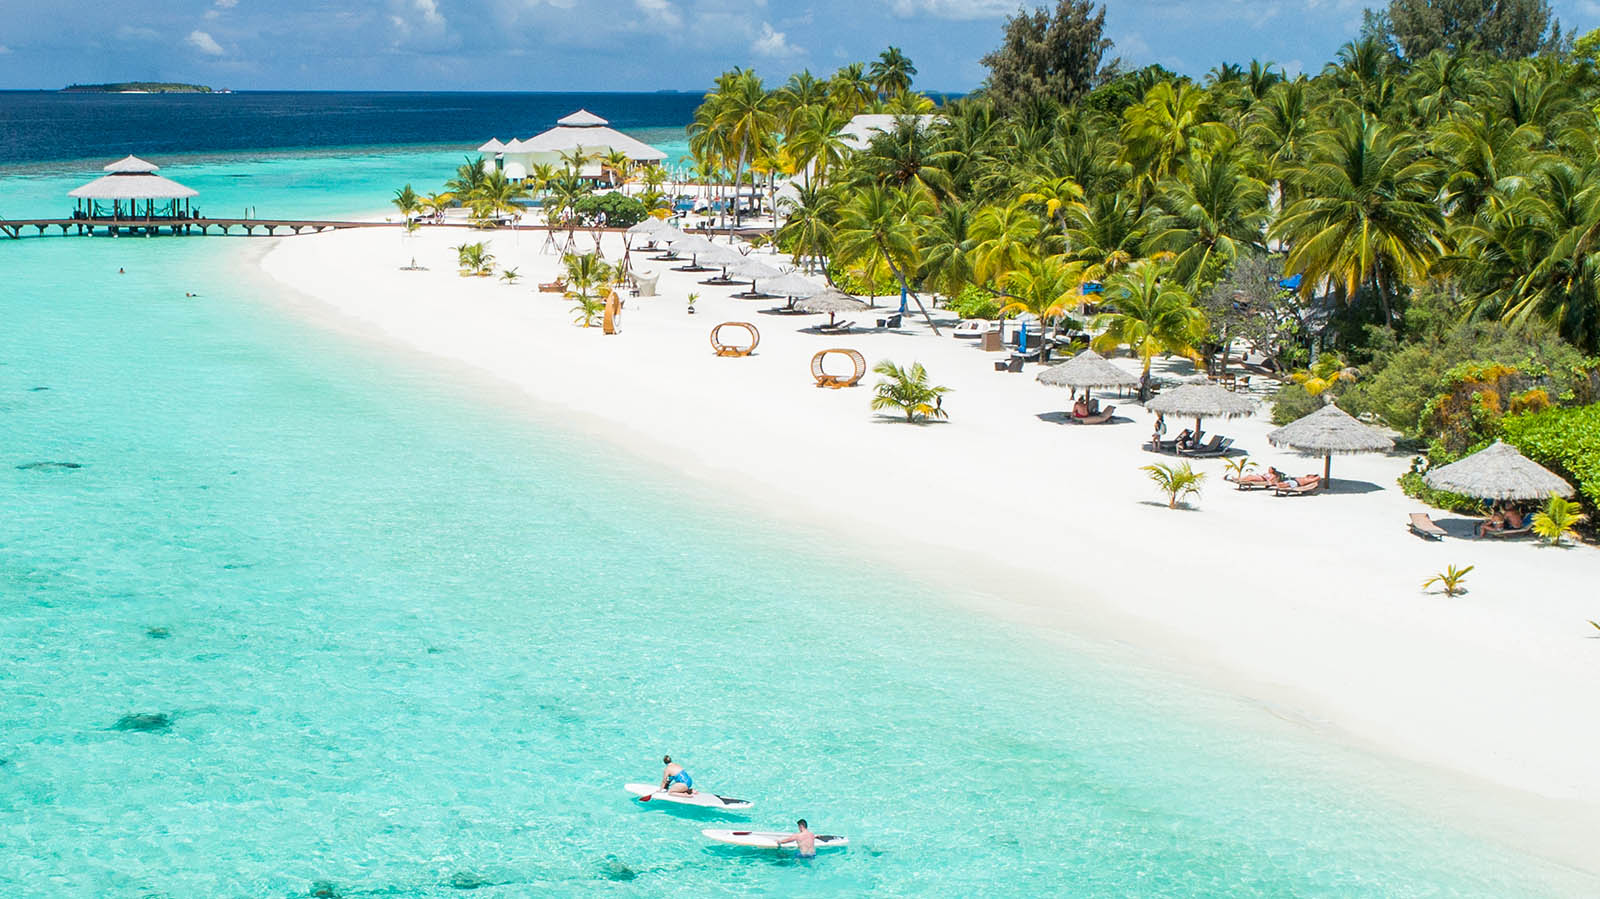 Kihaa Maldives Resort beach